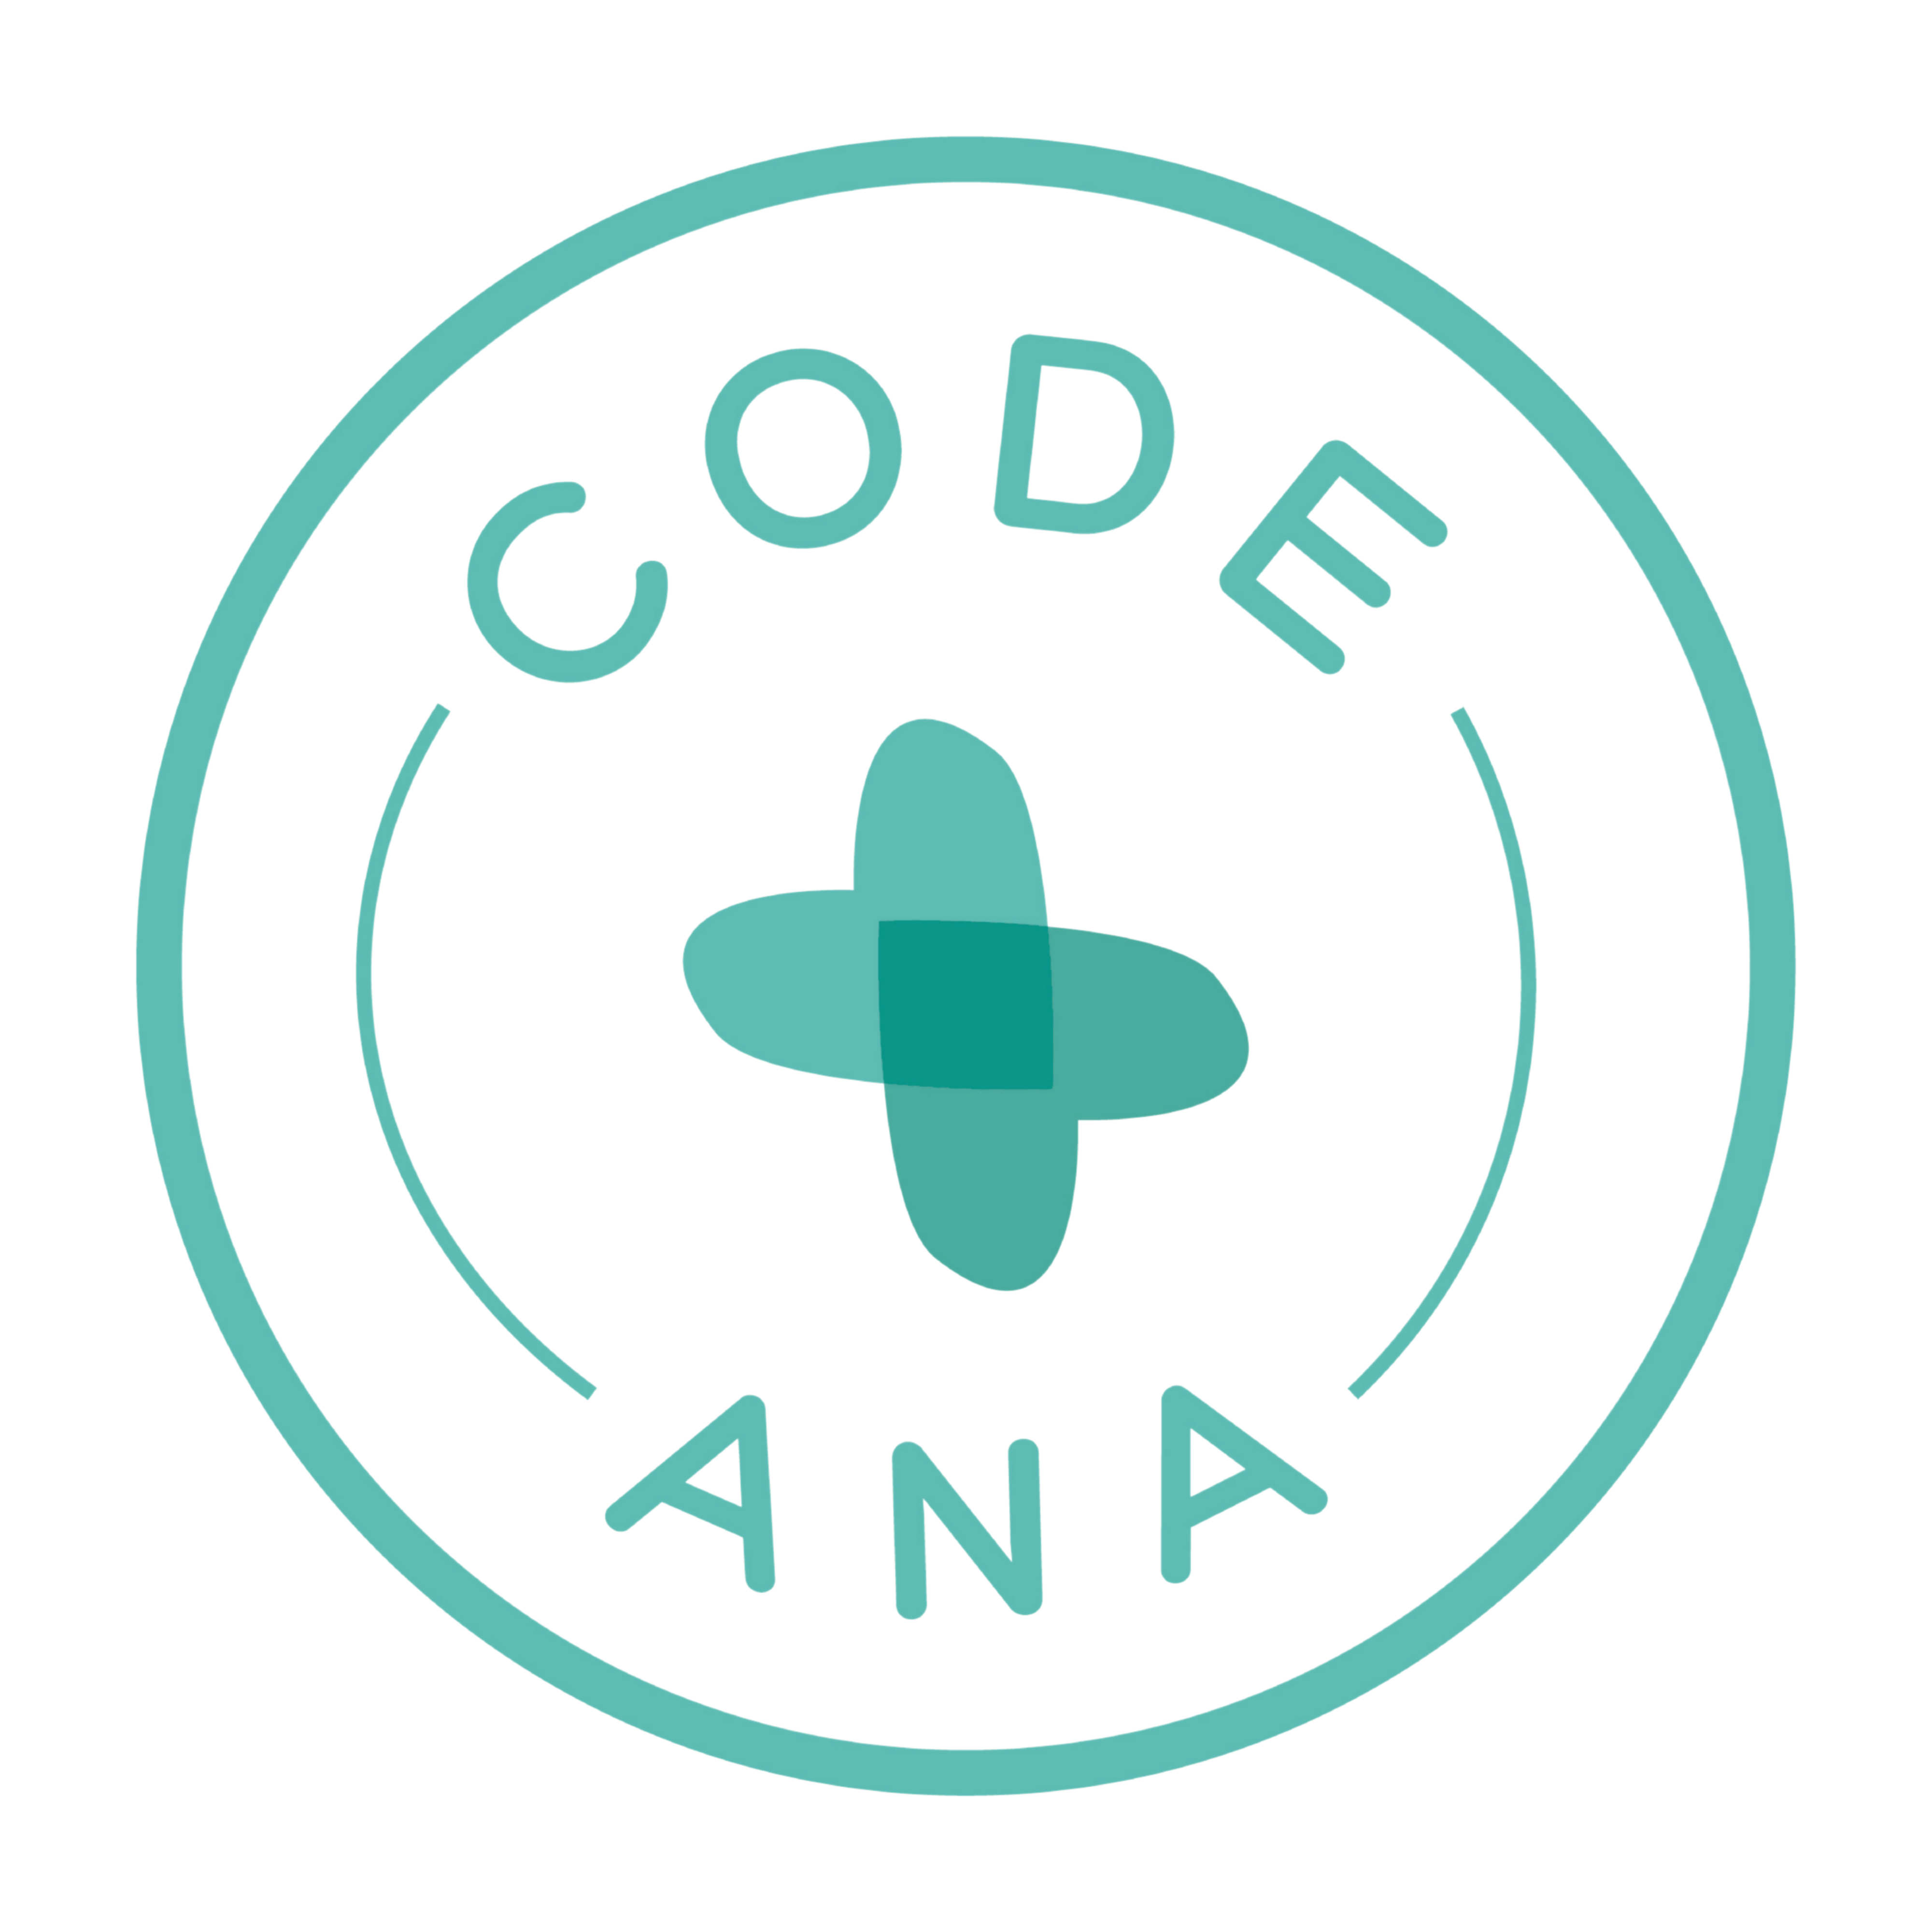 Code Ana